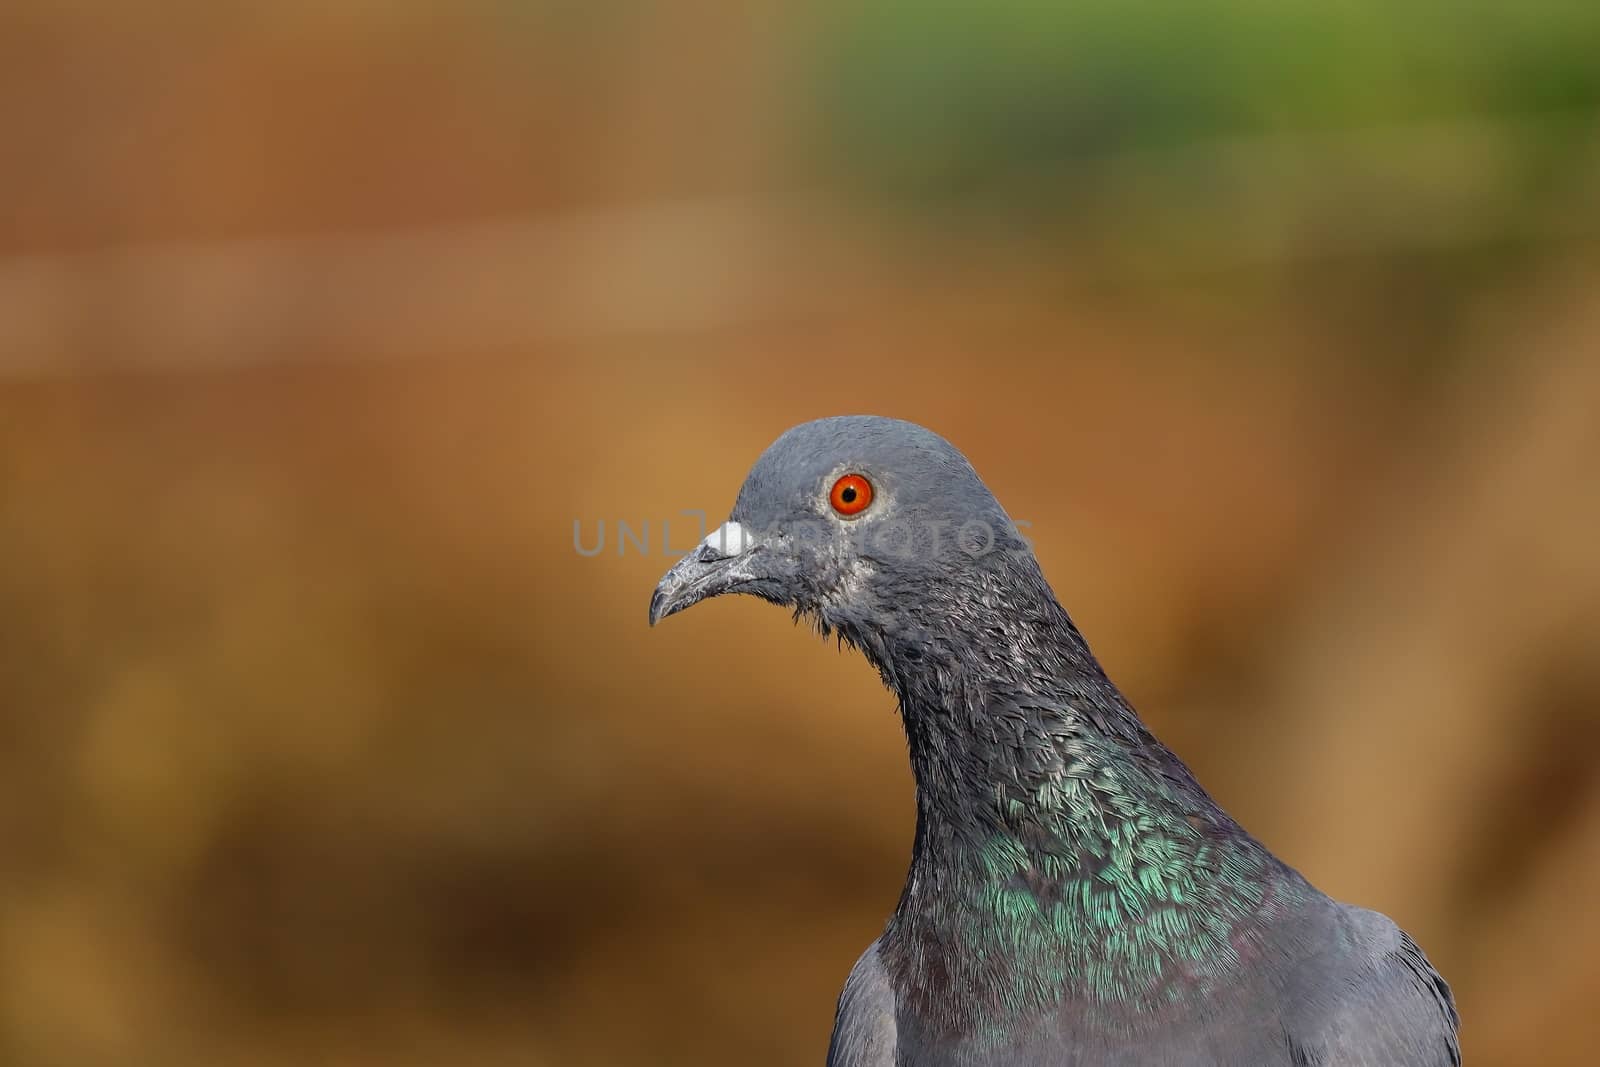 portrait pigeon bird, Hd image by 9500102400